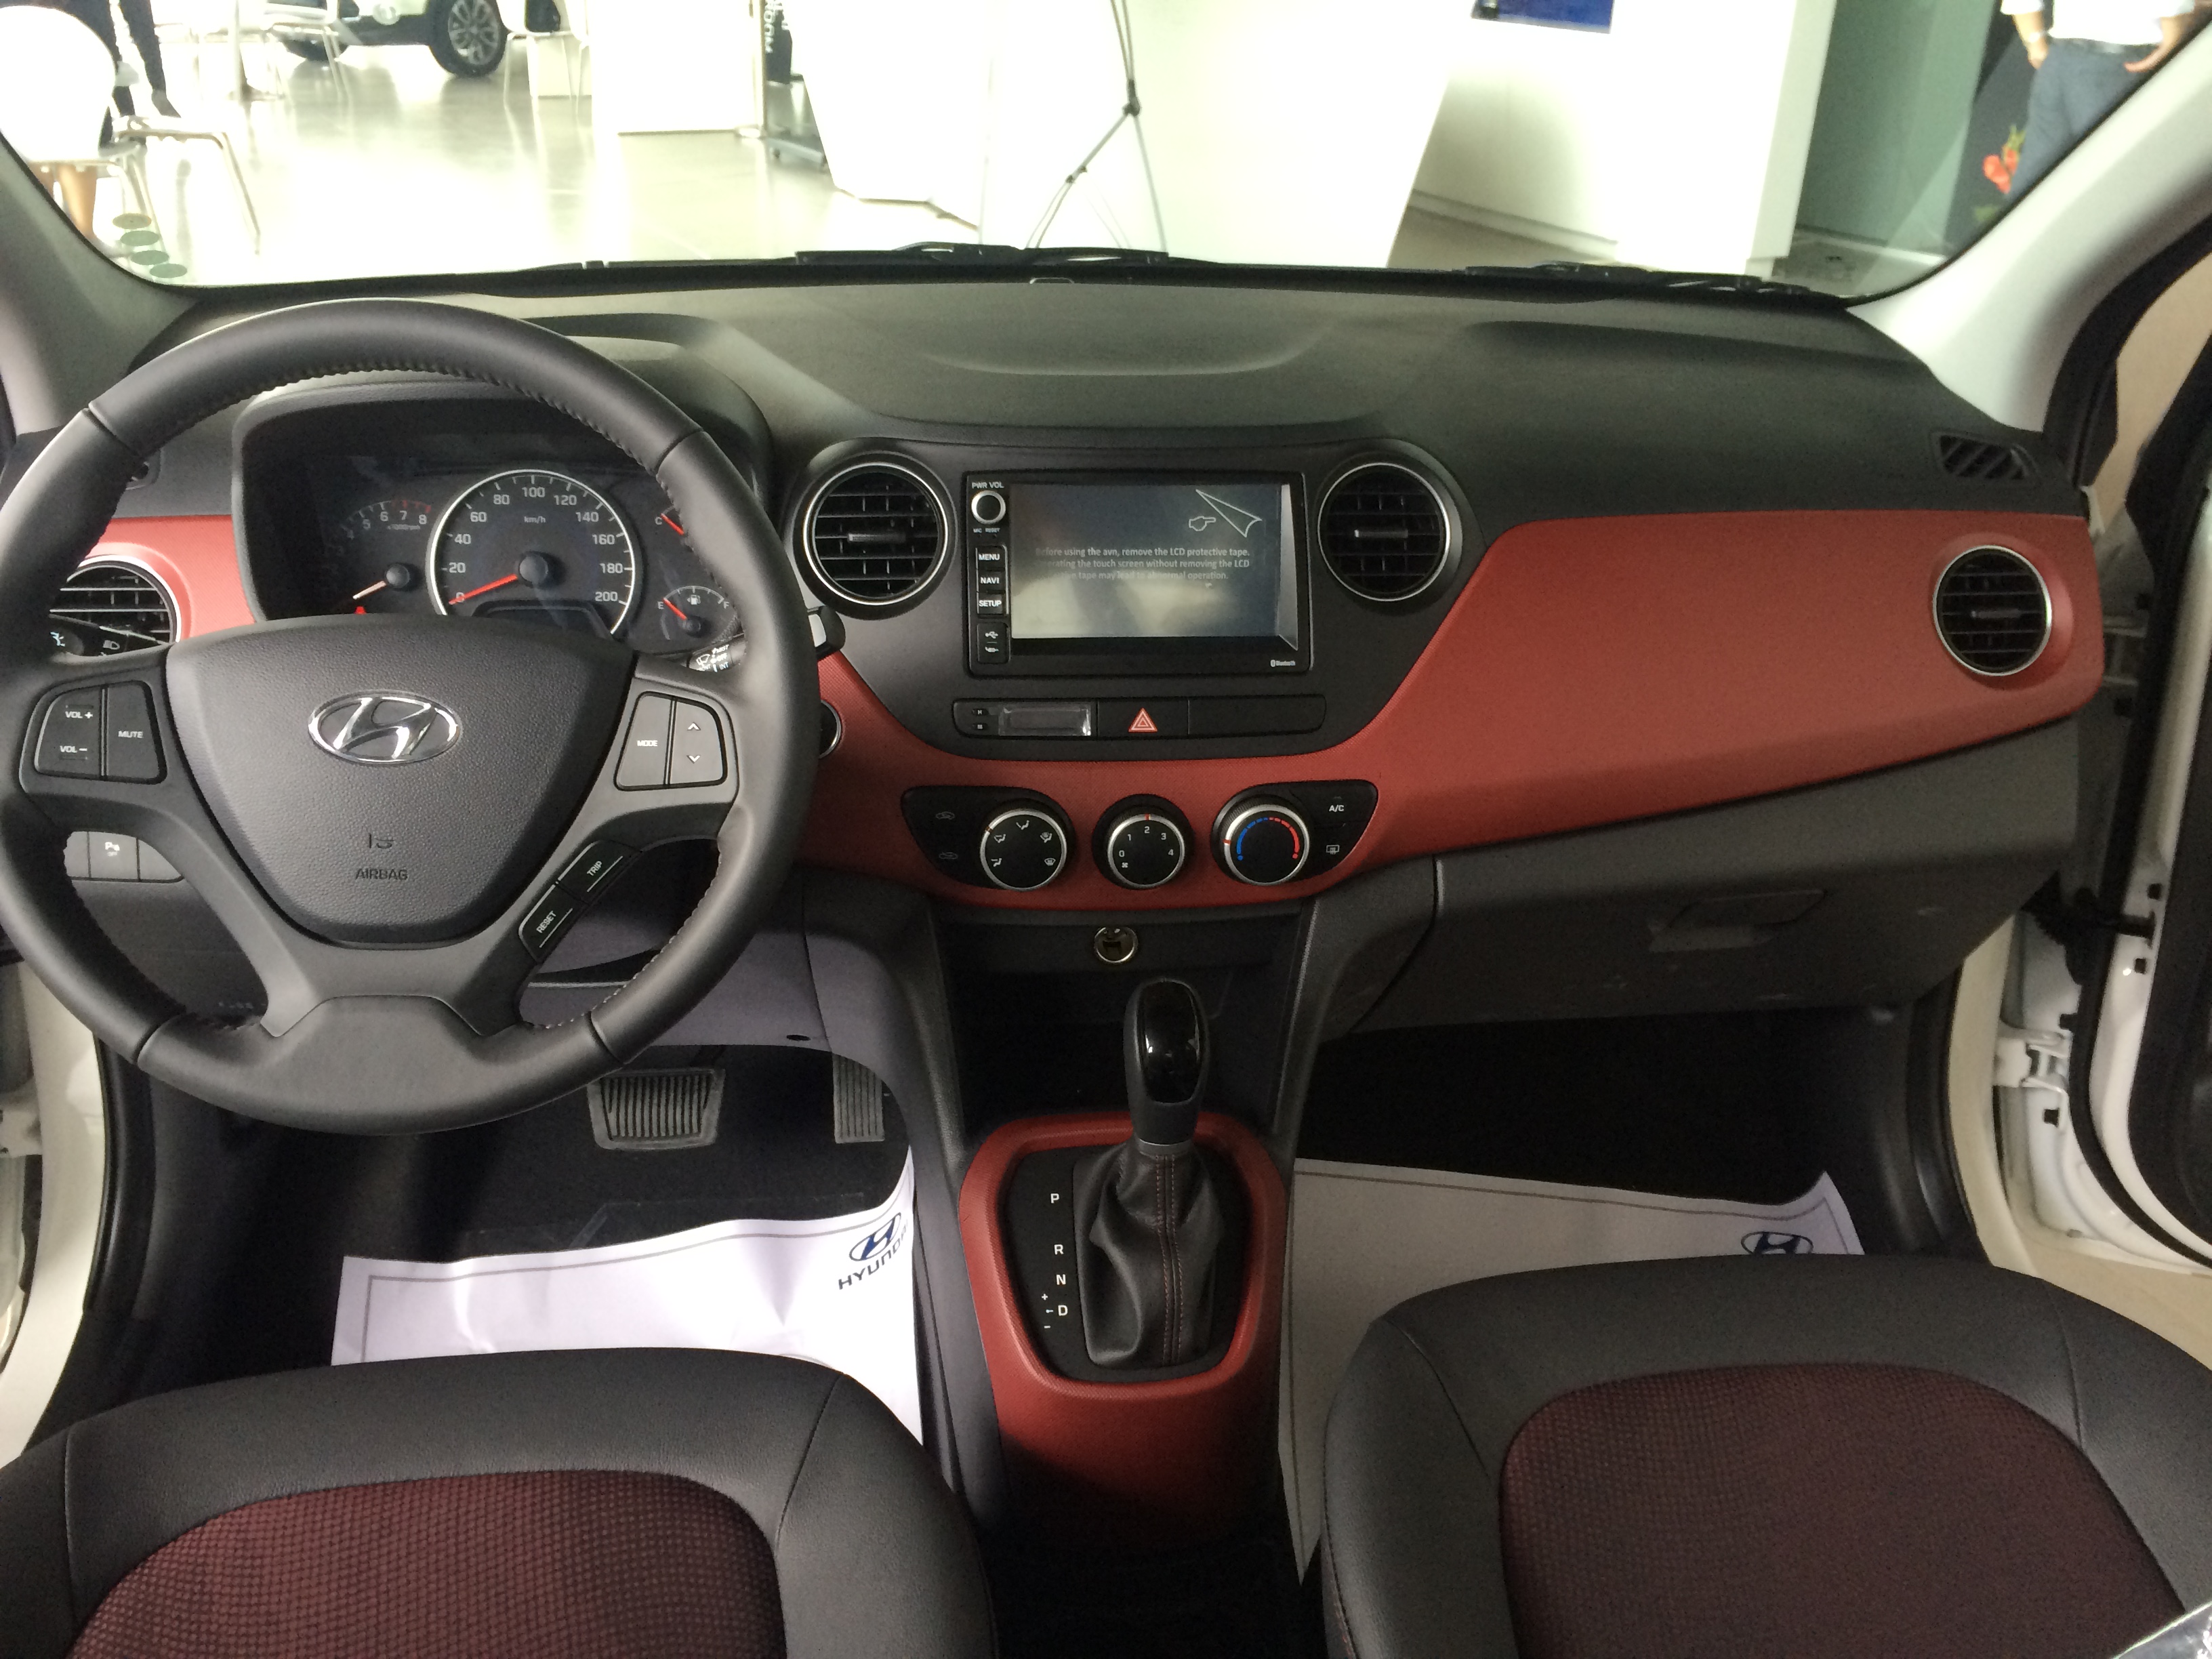 Hyundai i40 Sedan exterior specifications